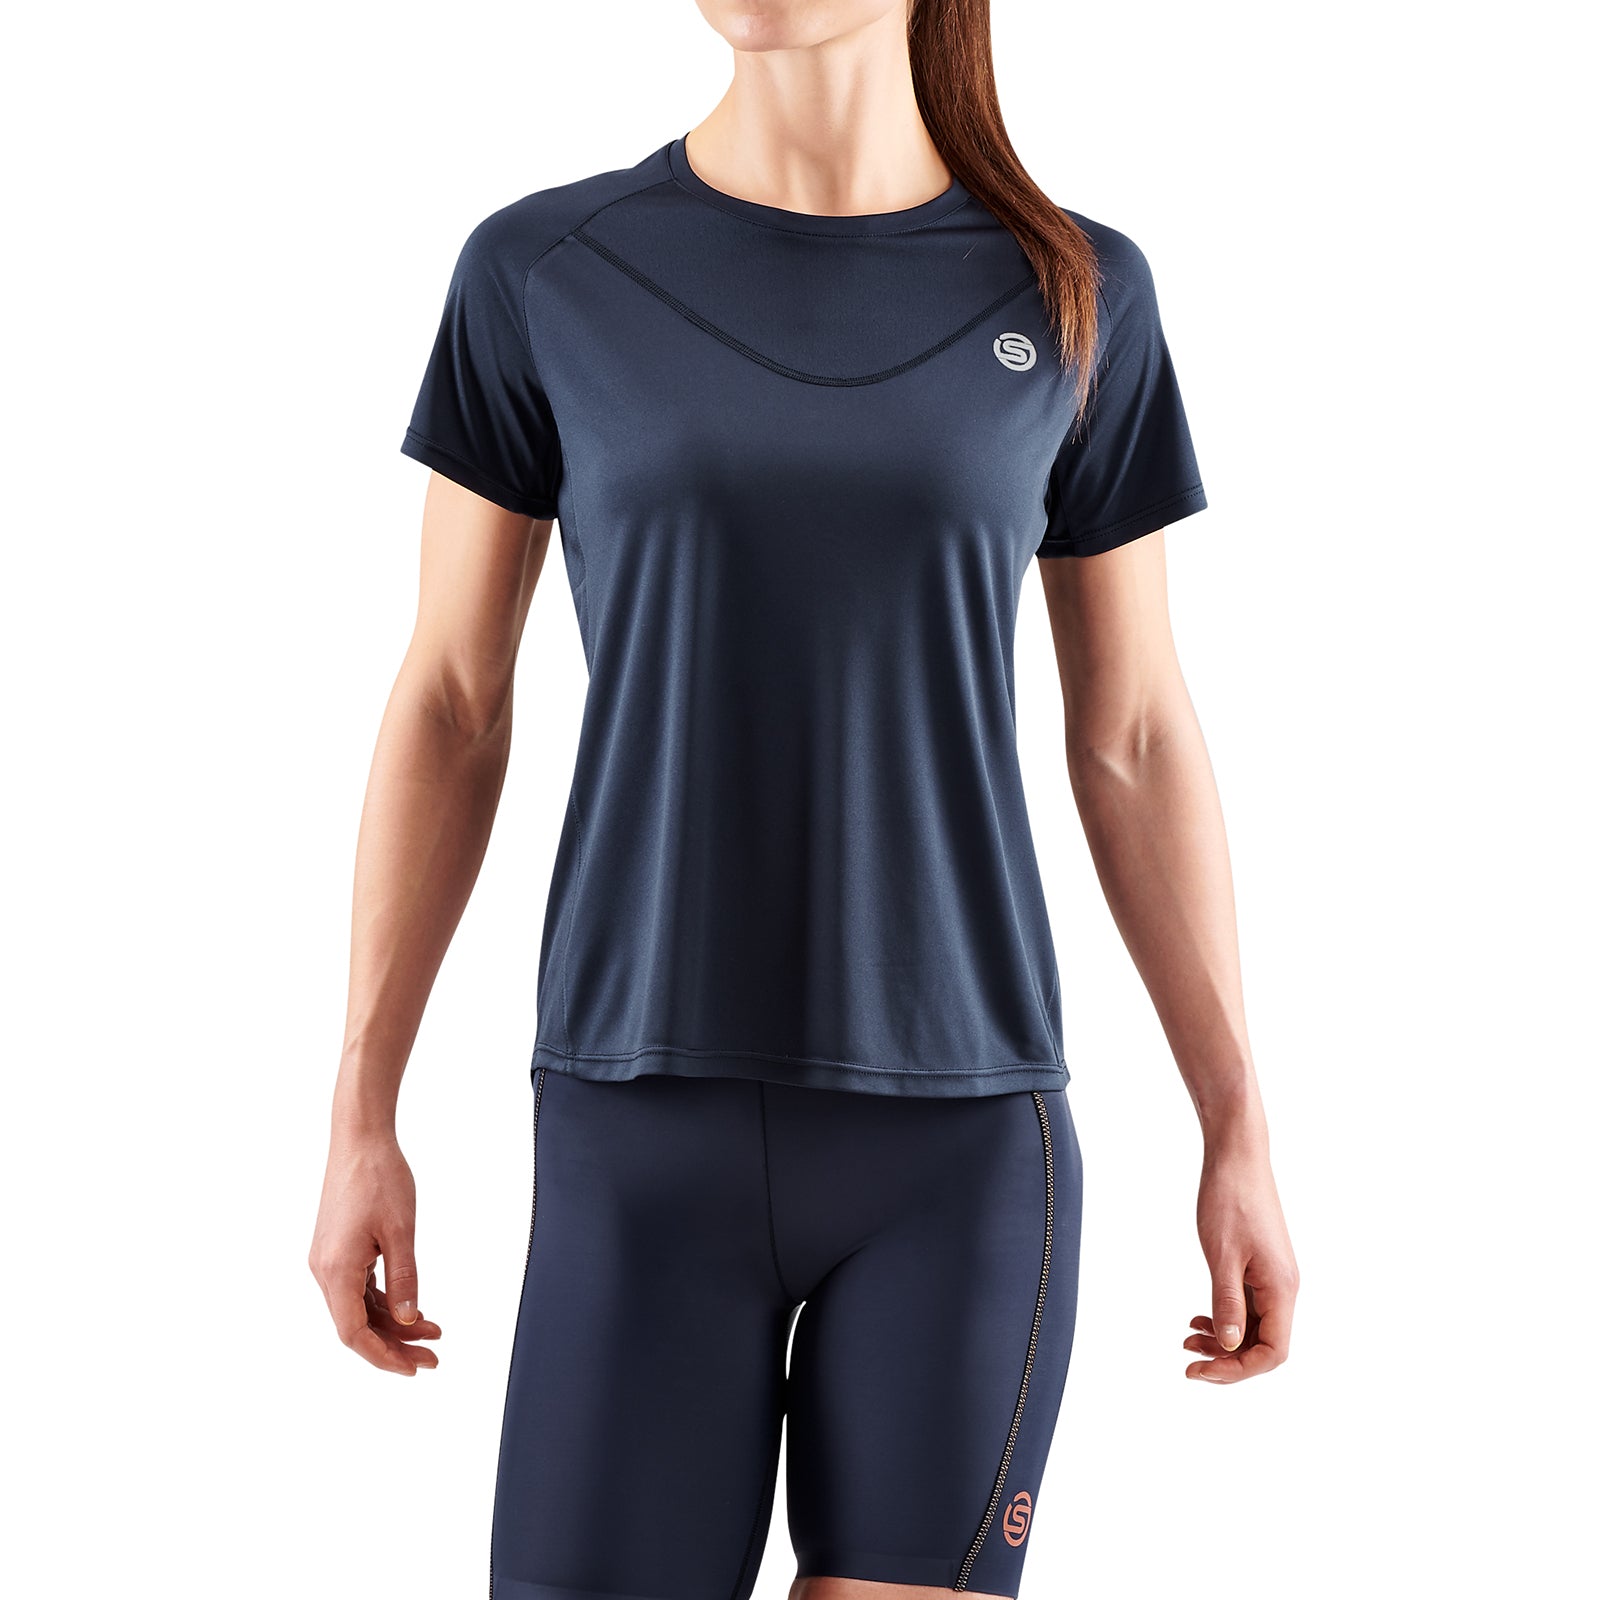 SKINS SERIES-3 Women's Short Sleeve Top Navy Blue